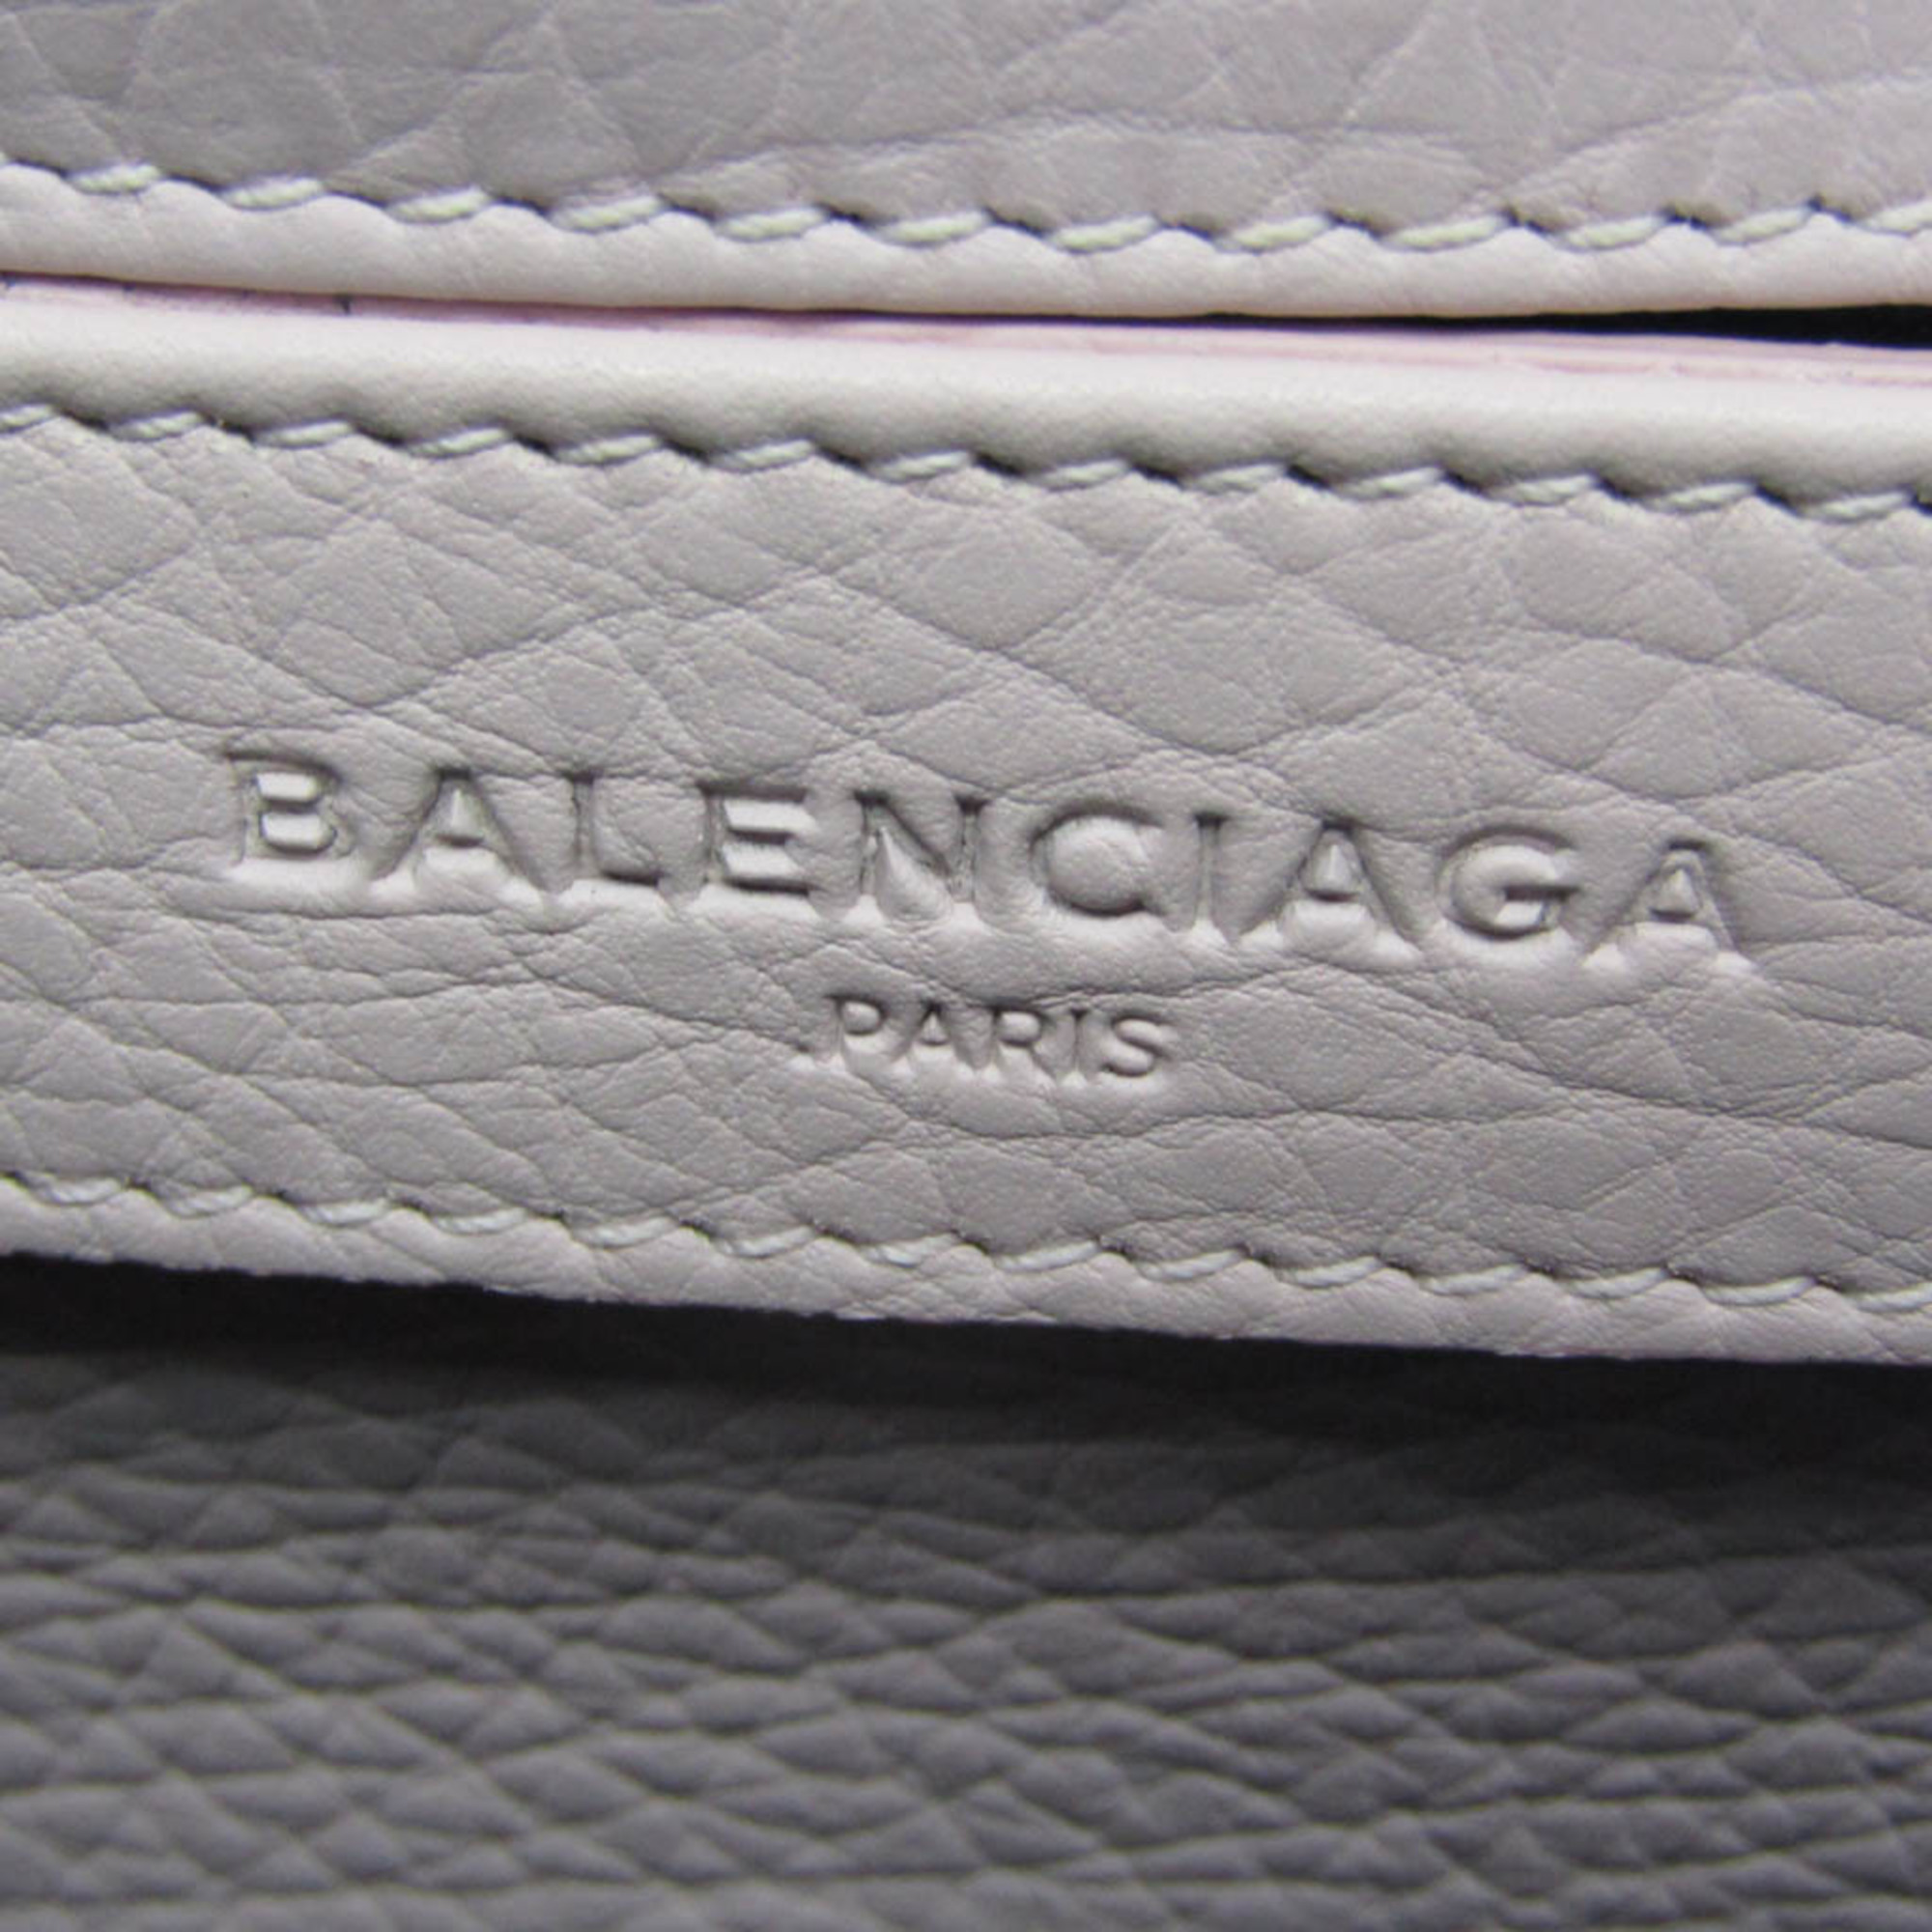 Balenciaga Tube S 338577 Women's Leather Shoulder Bag Pink